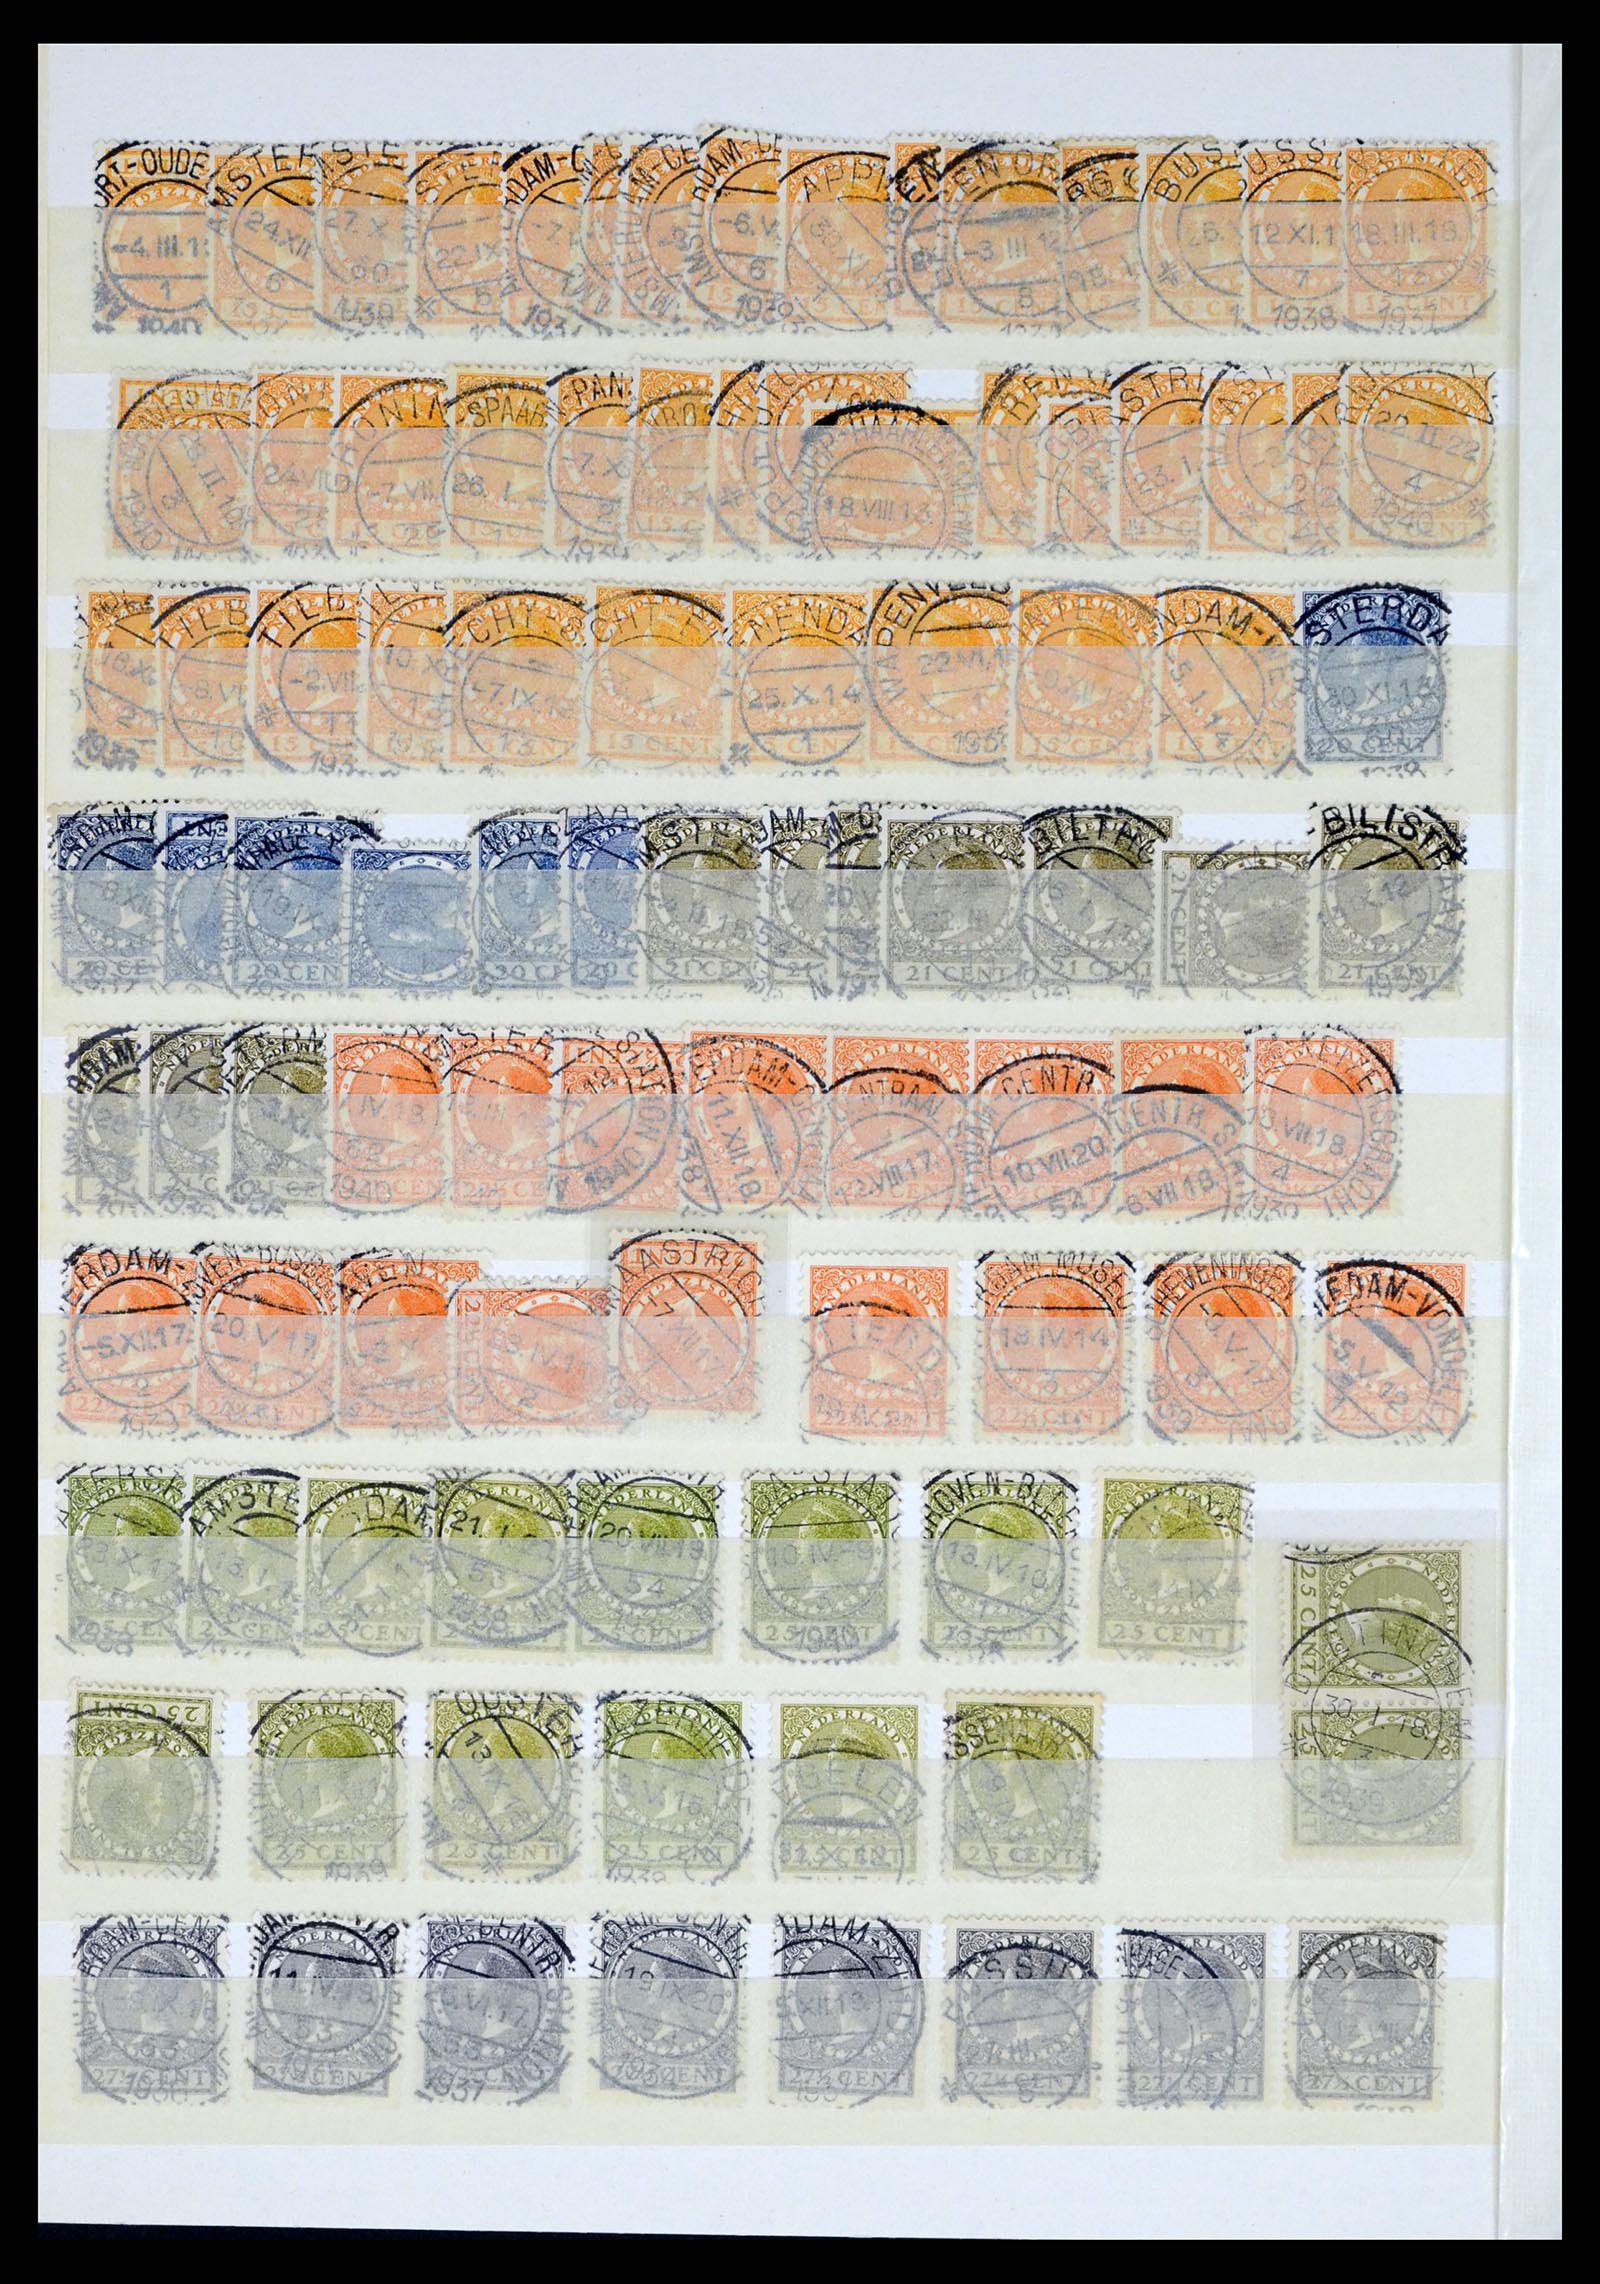 37424 010 - Stamp collection 37424 Netherlands shortbar cancels.